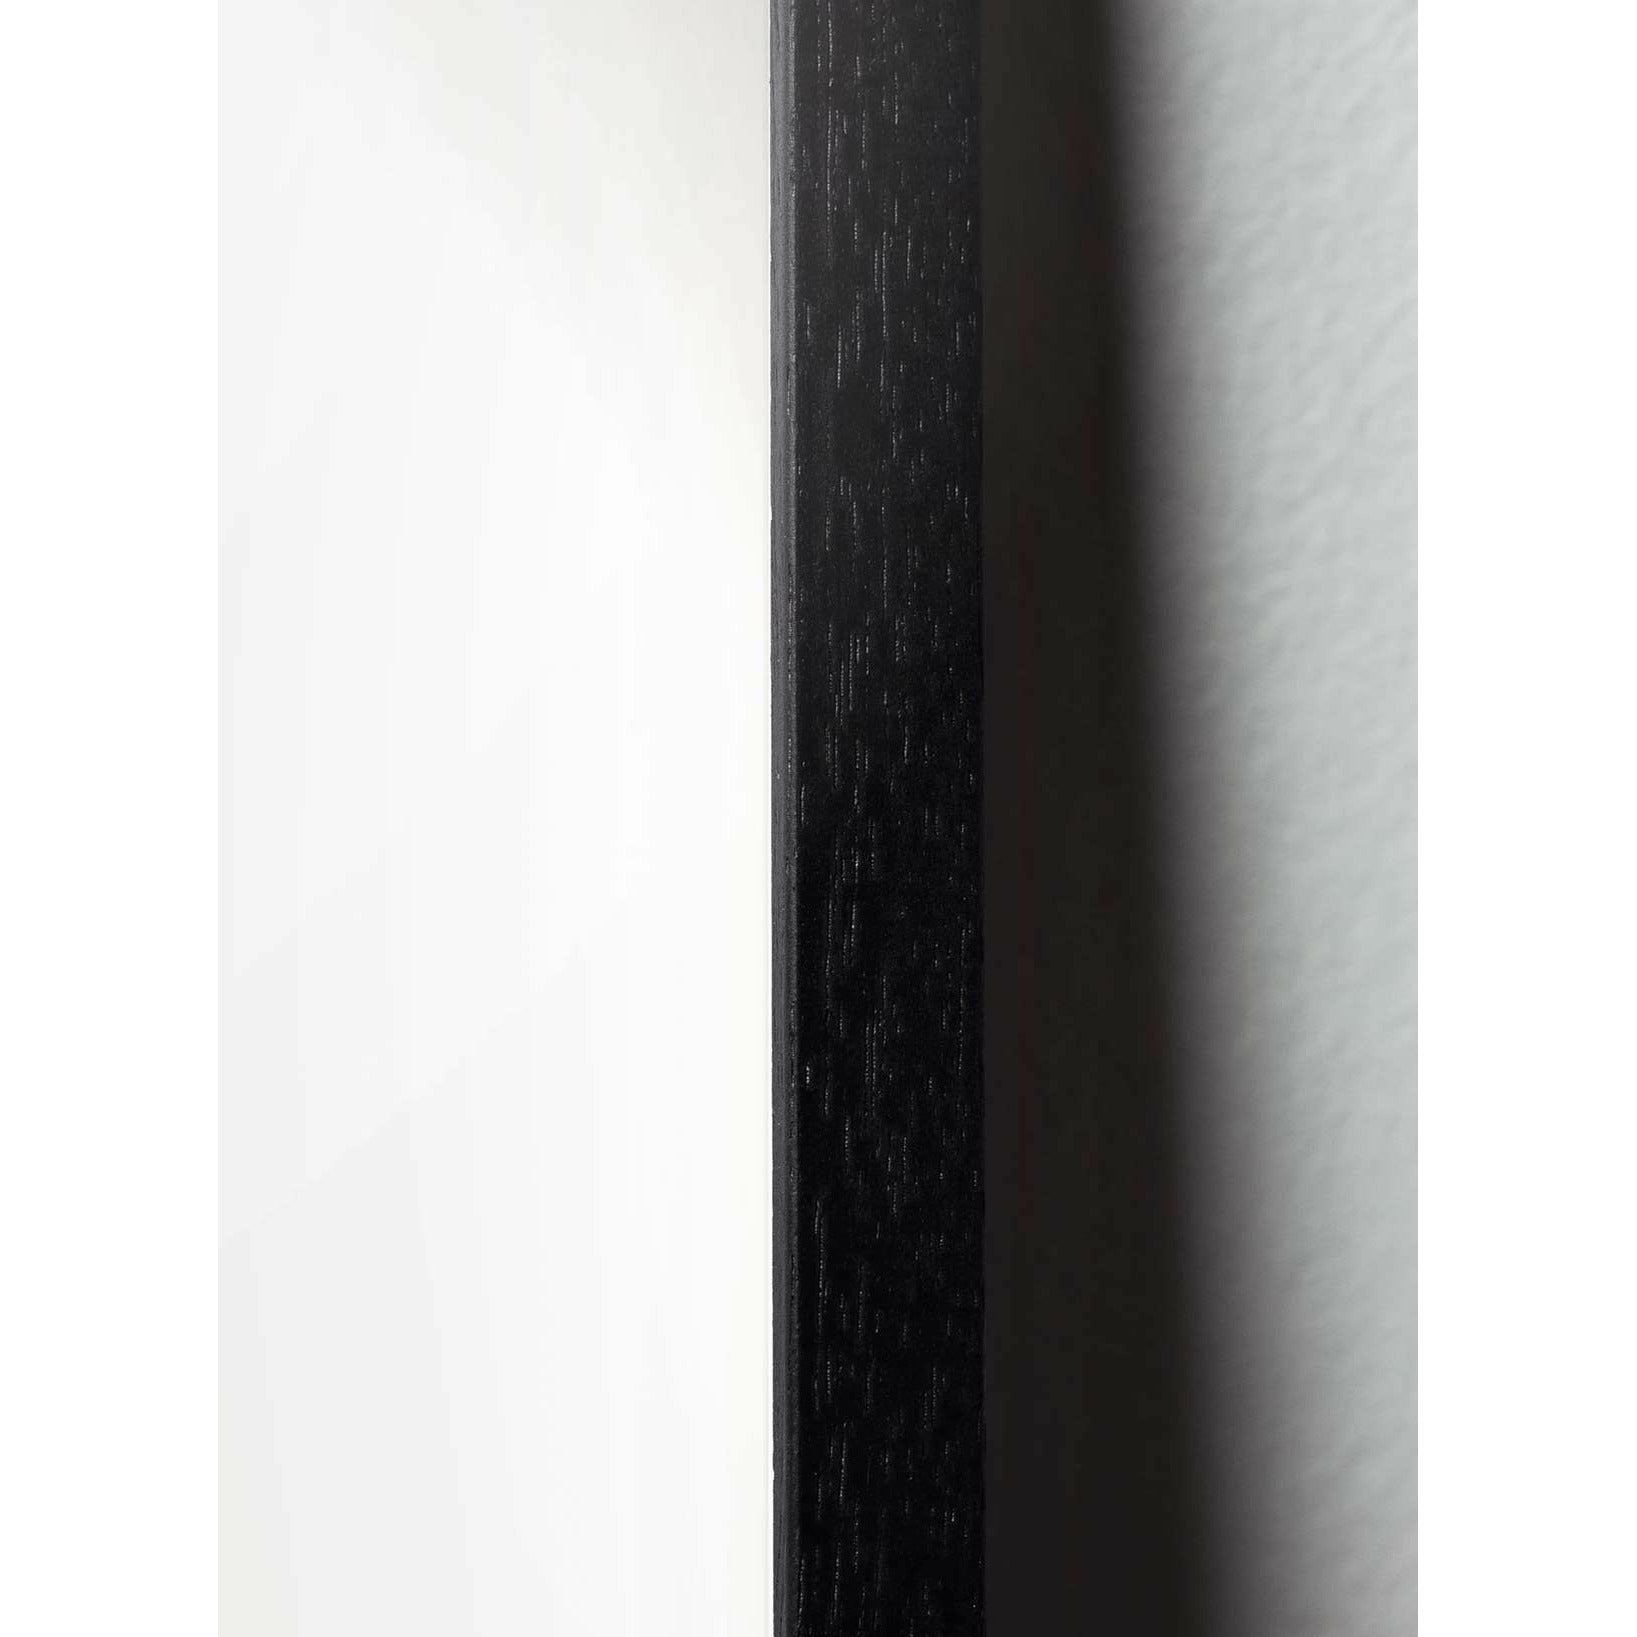 Brainchild Design Icon Poster, Frame In Black Lacquered Wood 30x40 Cm, Colour